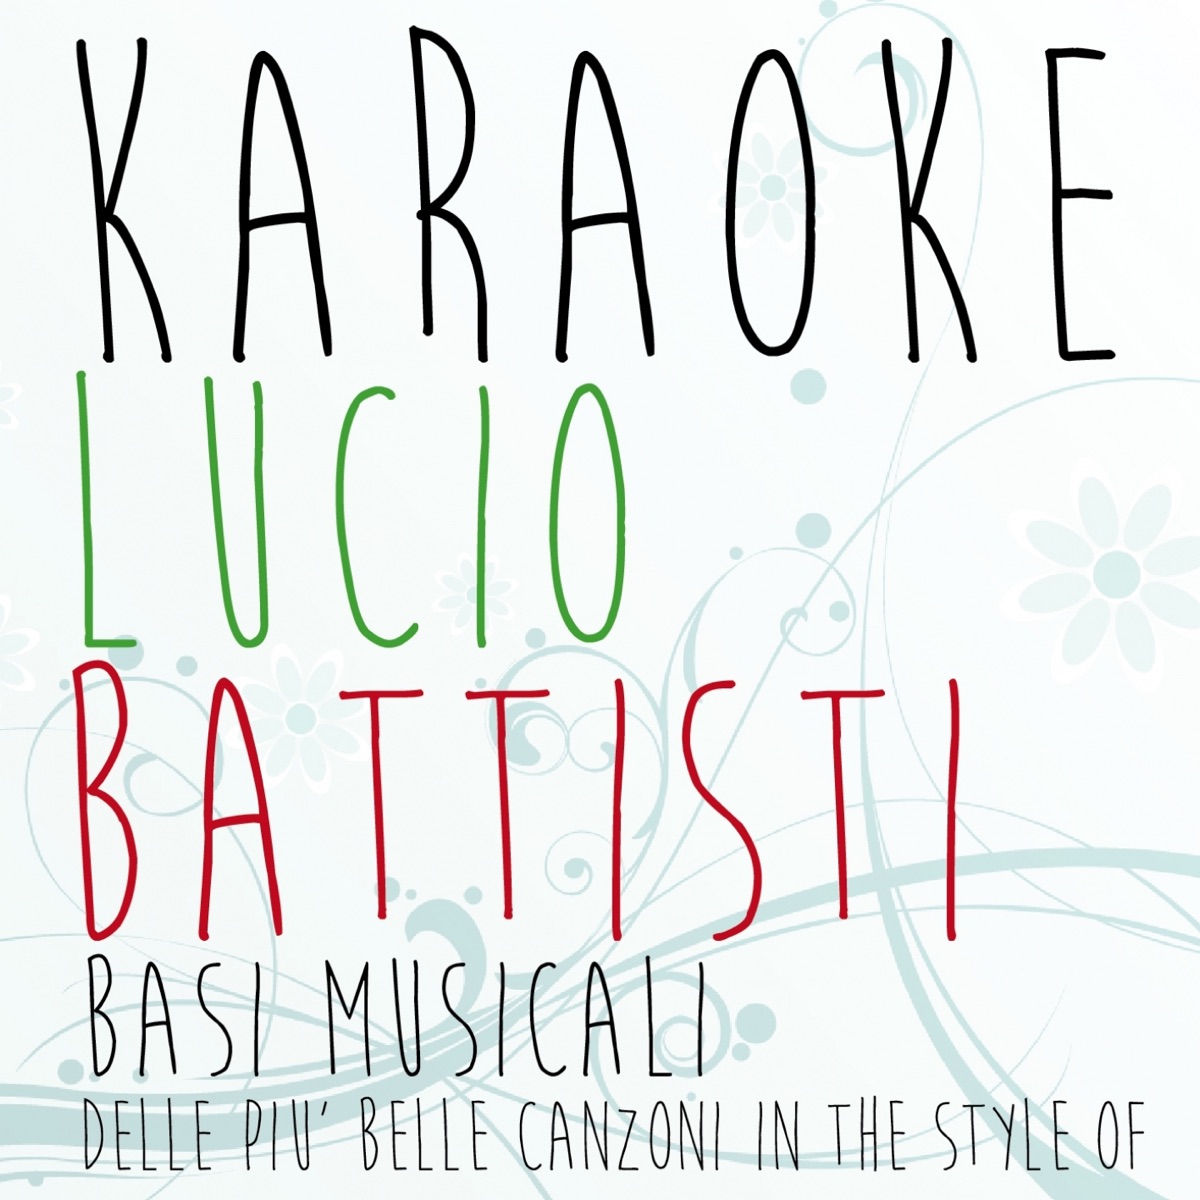 Karaoke Vasco Rossi (Basi musicali delle più belle canzoni 'In the Style  Of') - Album di KaraKara - Apple Music